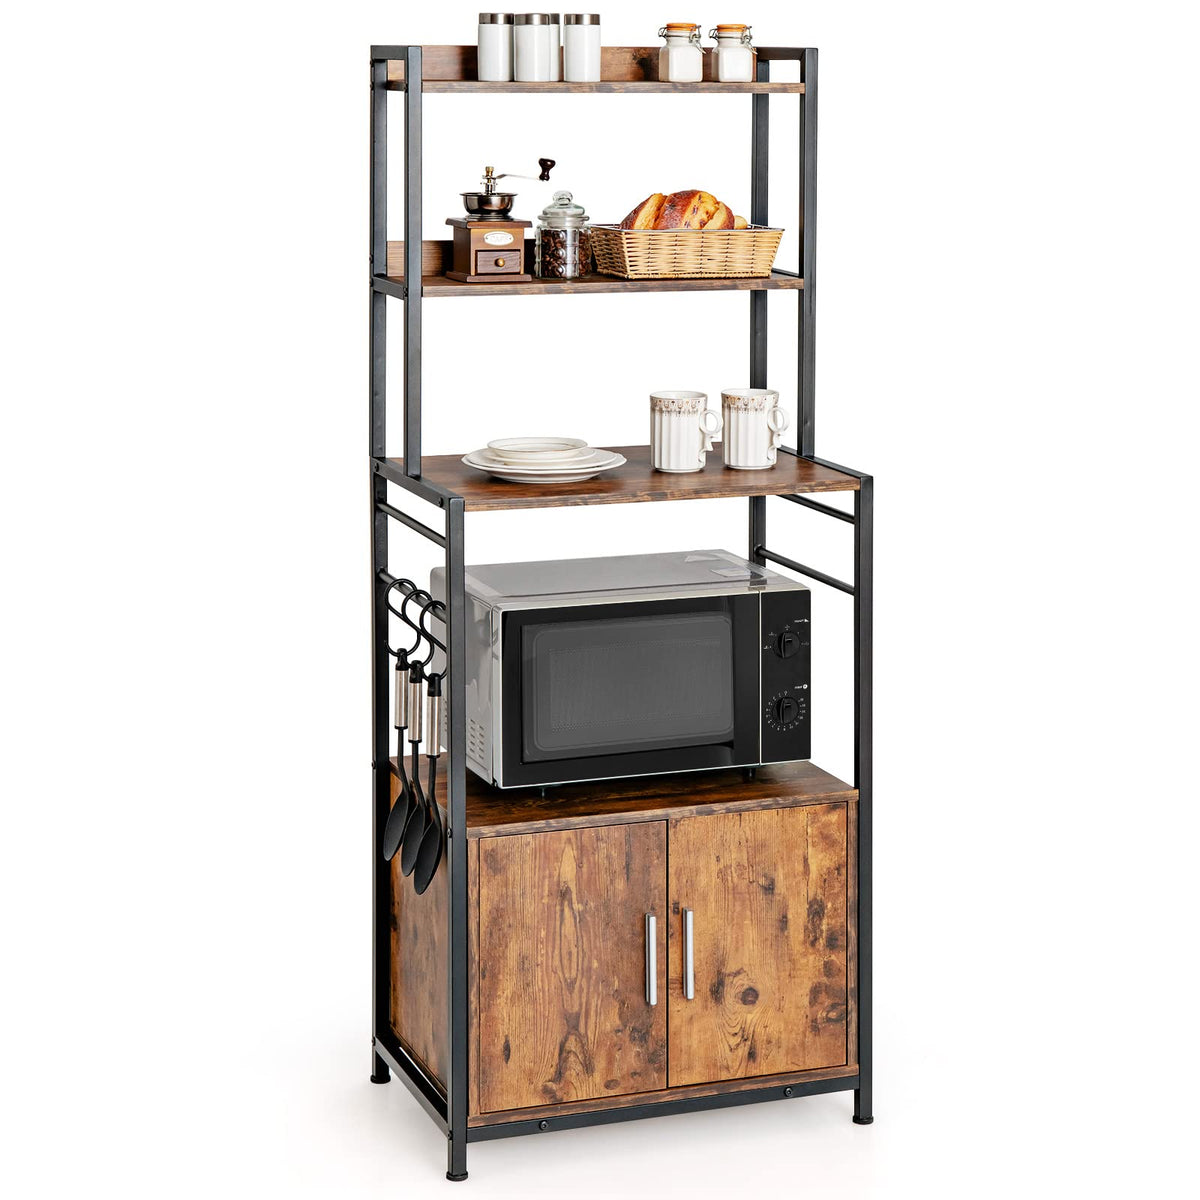 Giantex 4-Tier Baker’s Rack, Kitchen Storage Cabinet w/ 3 Tier Hutch Shelf, Industrial Microwave Oven Stand